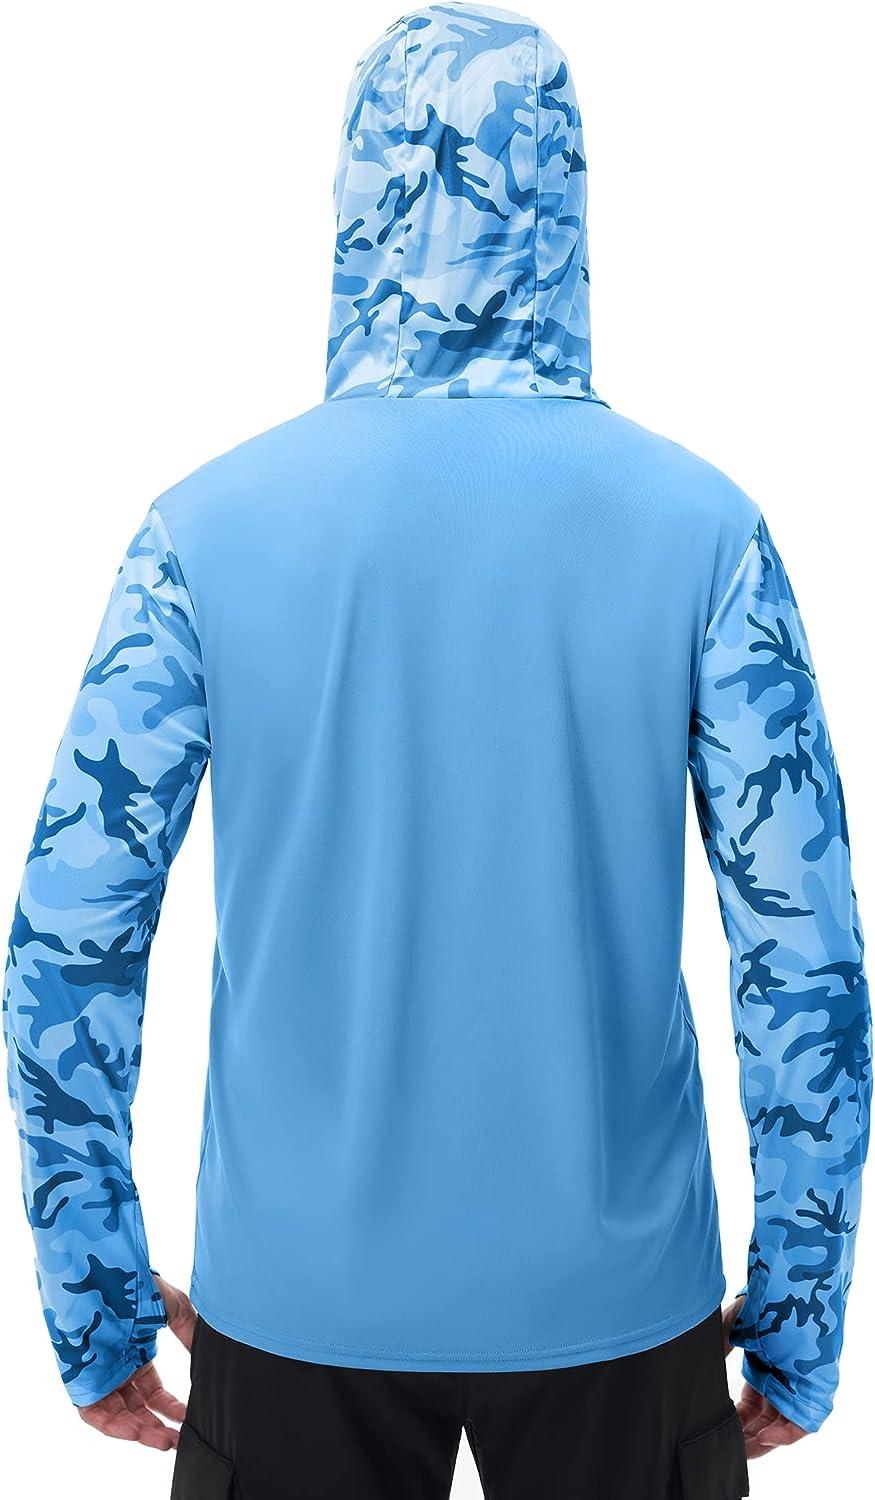 Comprar FISHEAL Men's Performance Fishing Hoodie Shirt - UPF 50+